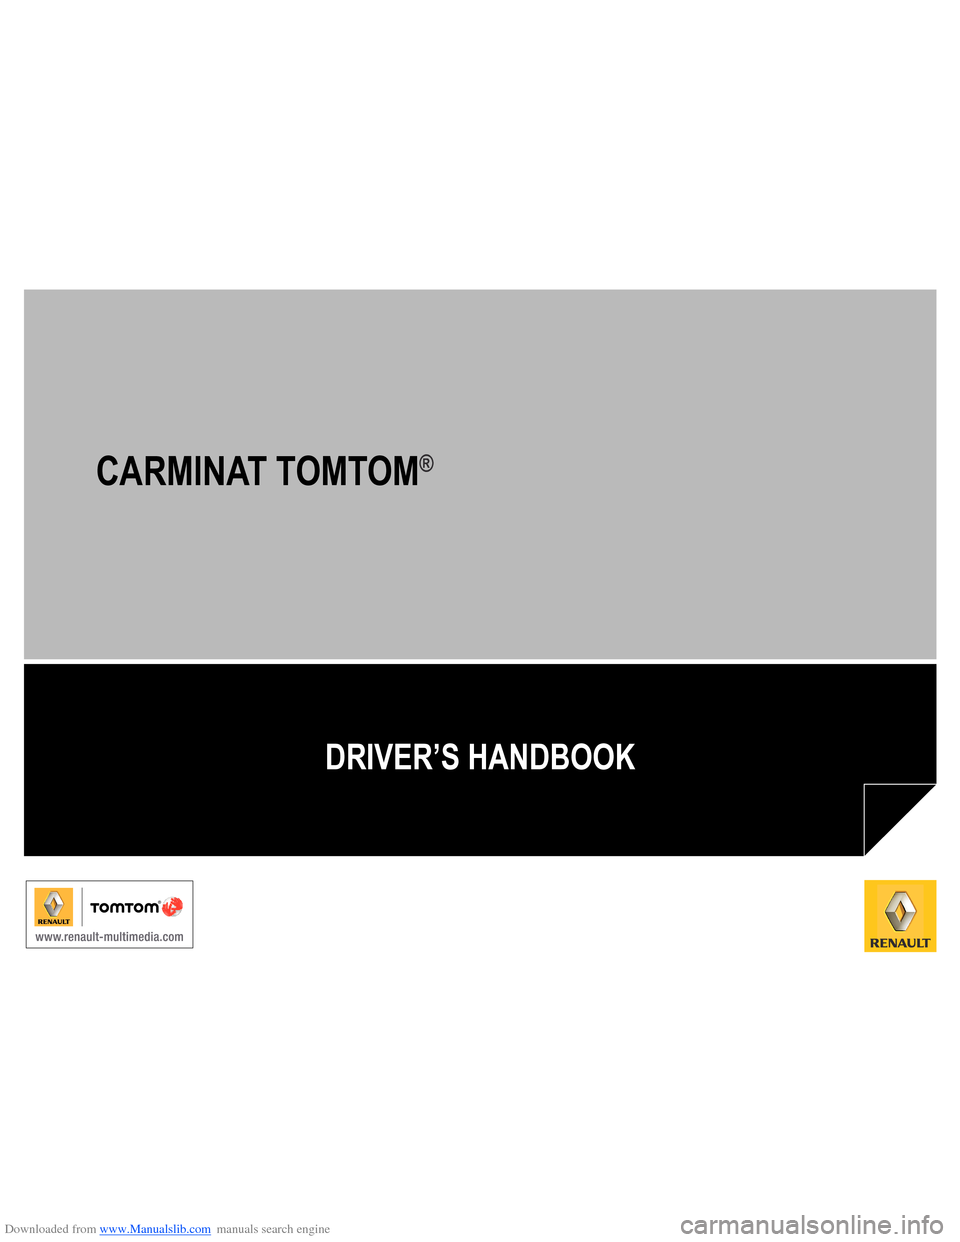 RENAULT MEGANE 2013 X95 / 3.G Carminat Tomtom Navigation Owners Manual Downloaded from www.Manualslib.com manuals search engine 
DRIVER’S HANDBOOK
CARMINAT TOMTOM®  